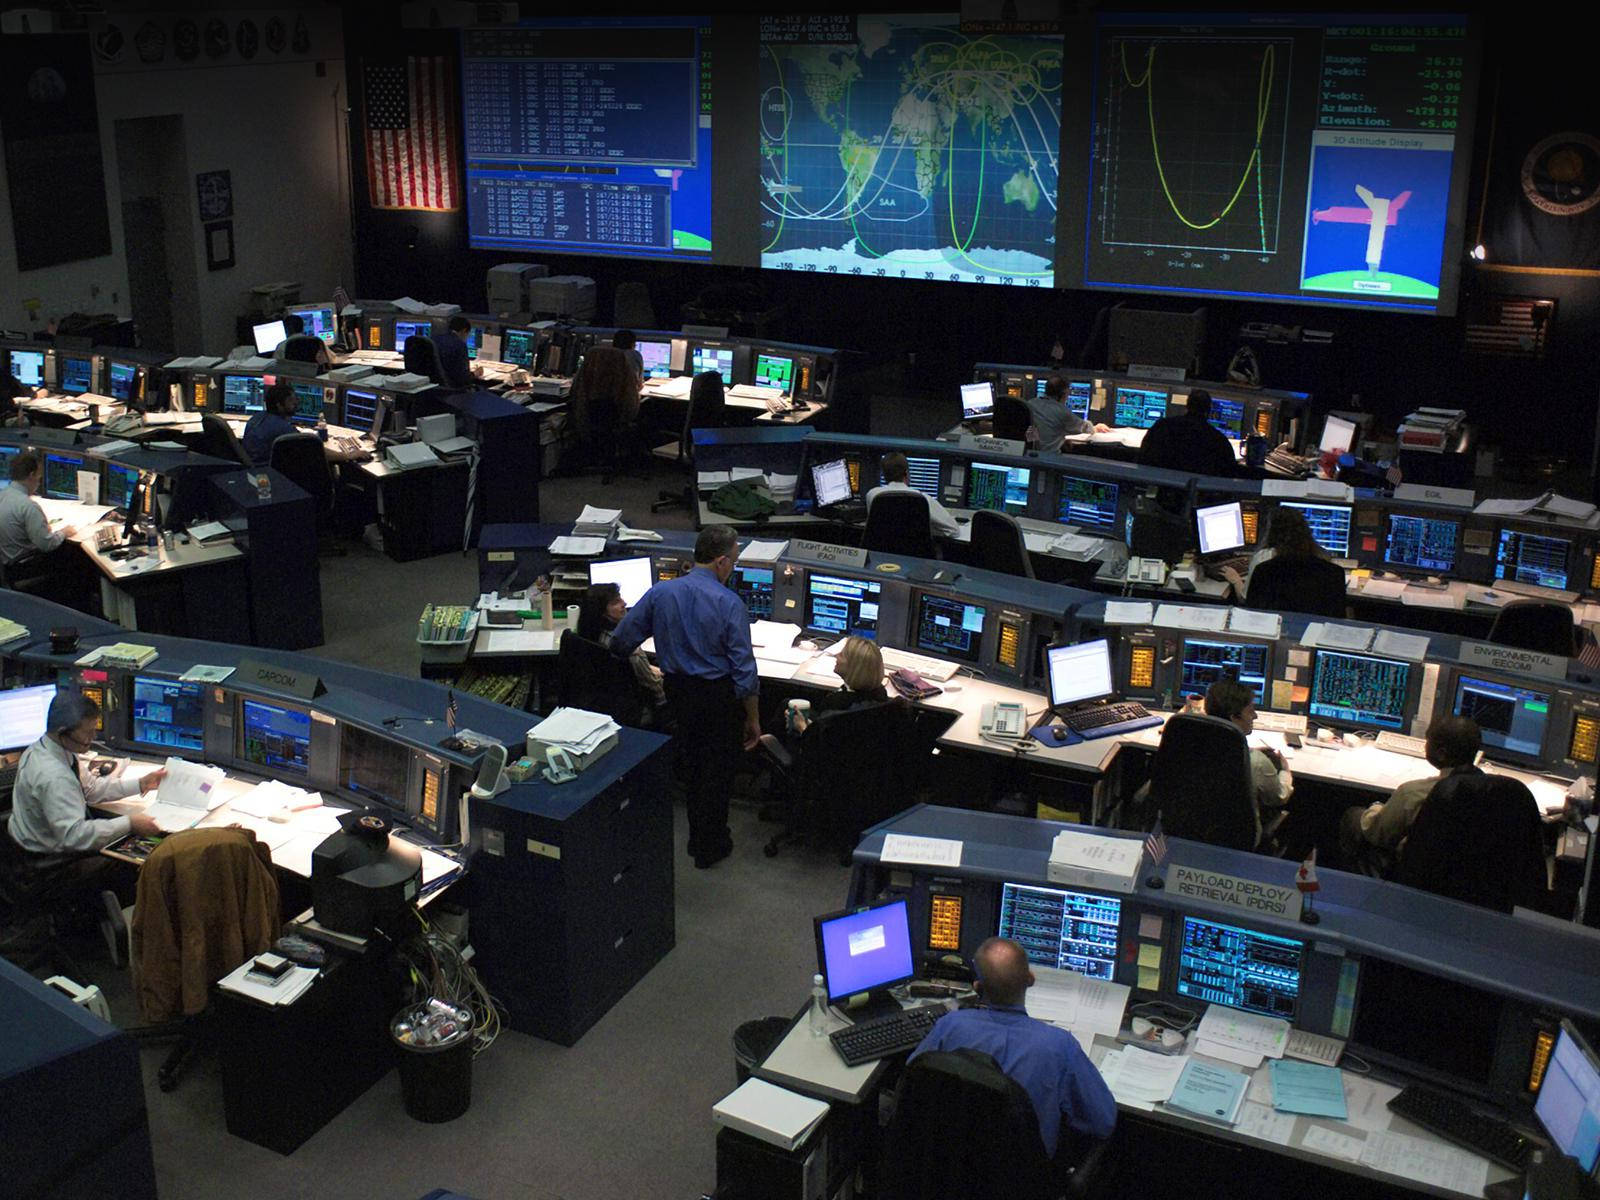 NASA Houston Computers Wallpaper